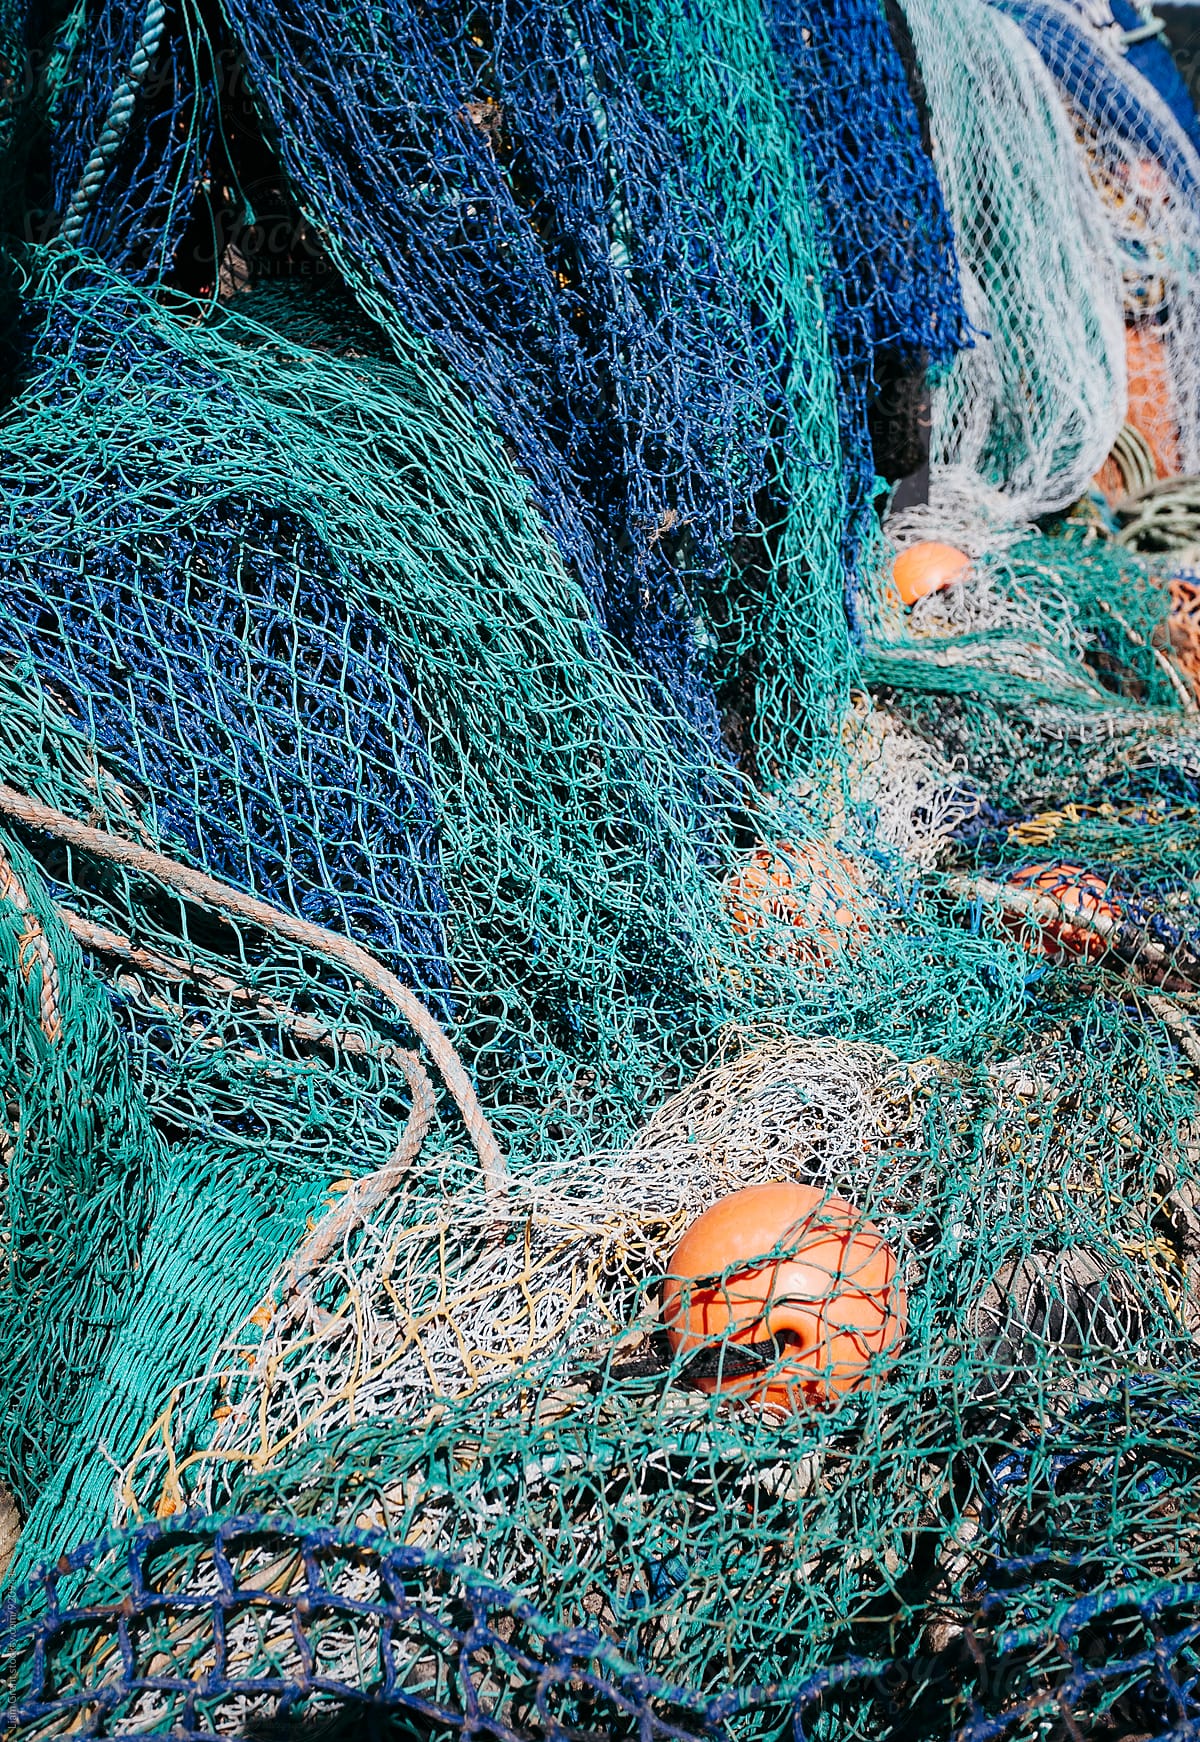 Fishing nets in the Harbour at Lyme Regis. Devon, UK.